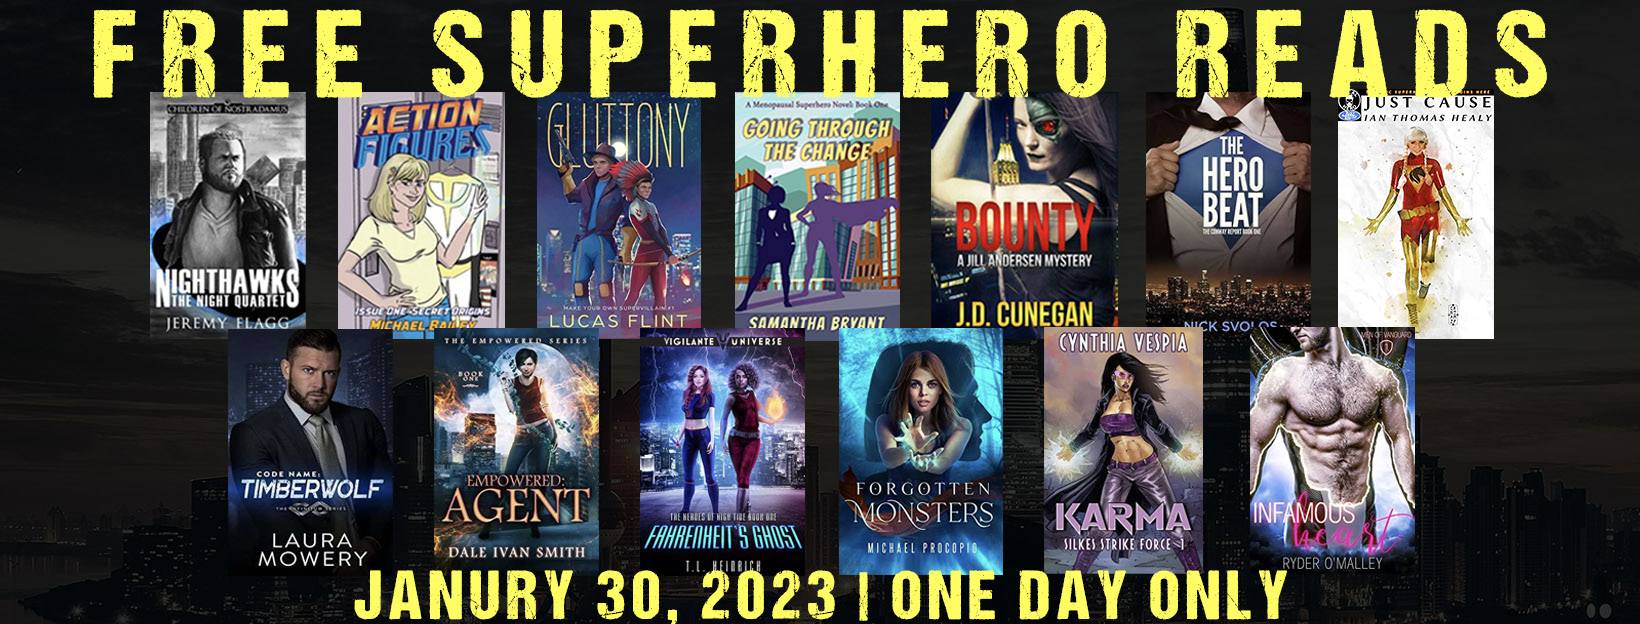 Superhero fiction promo banner